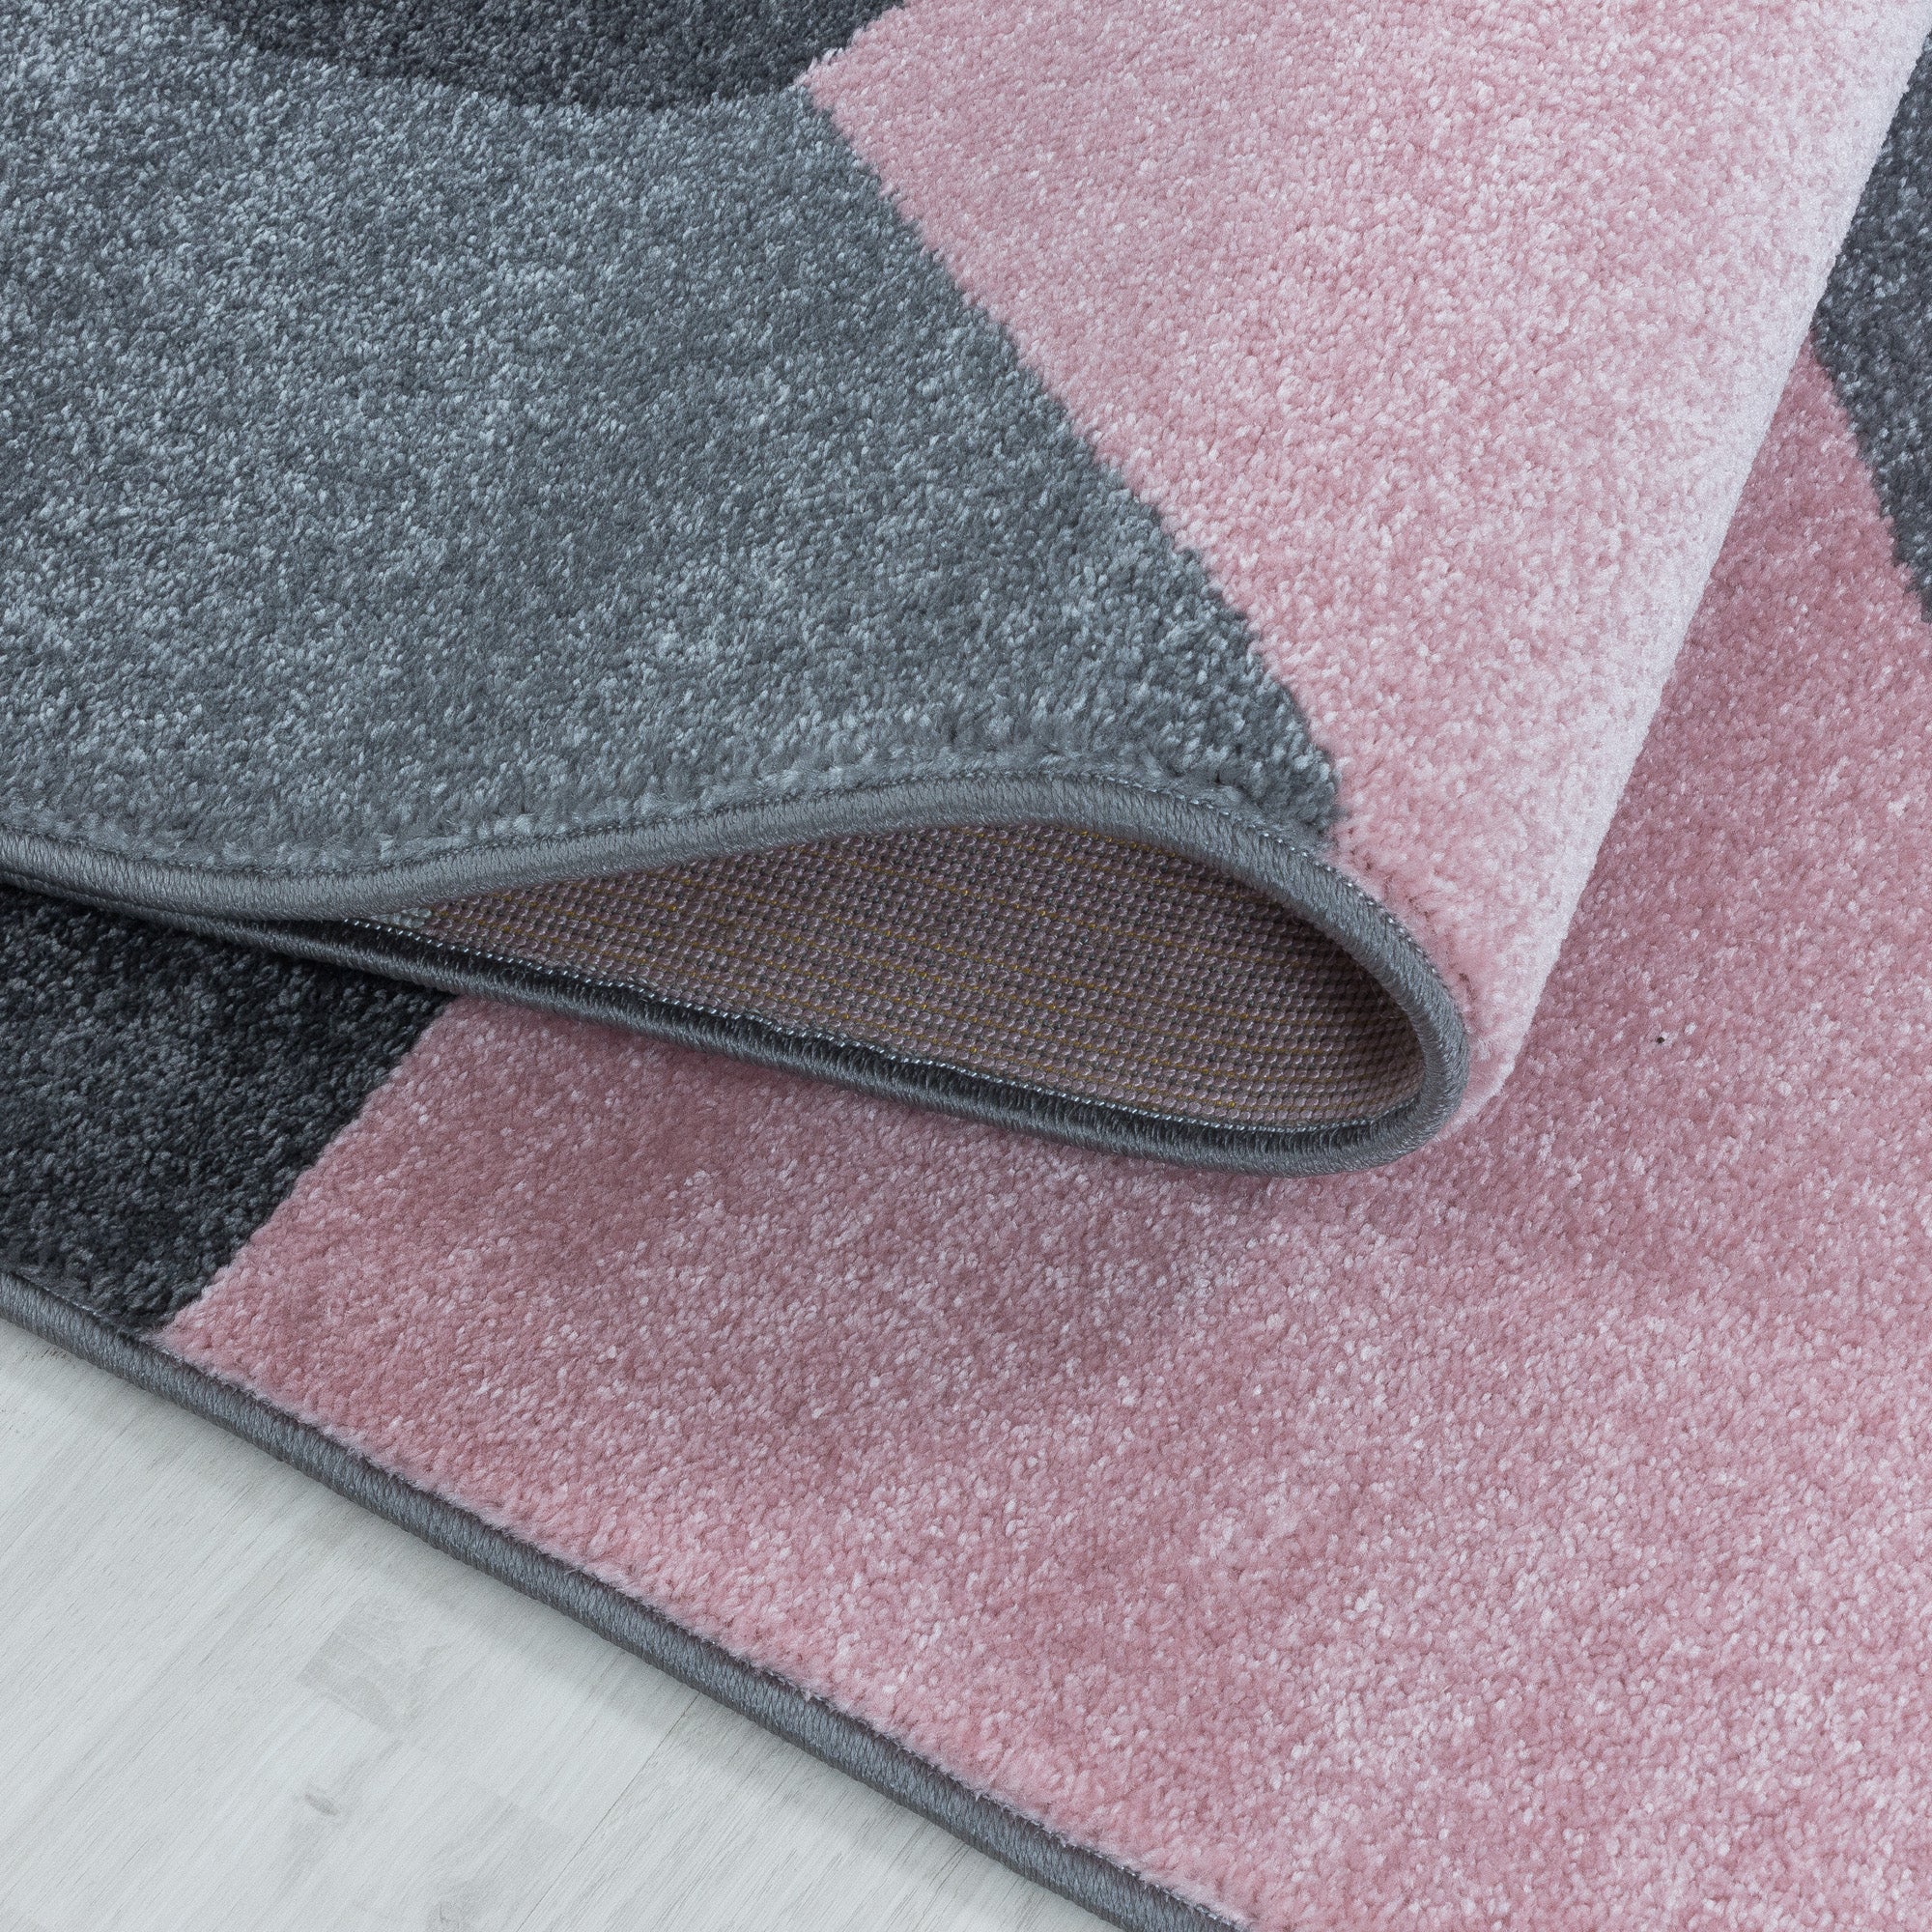 Kurzflor Teppich Bettset Rosa Muster Geometrisch Modern Läuferset 3 Teile Weich